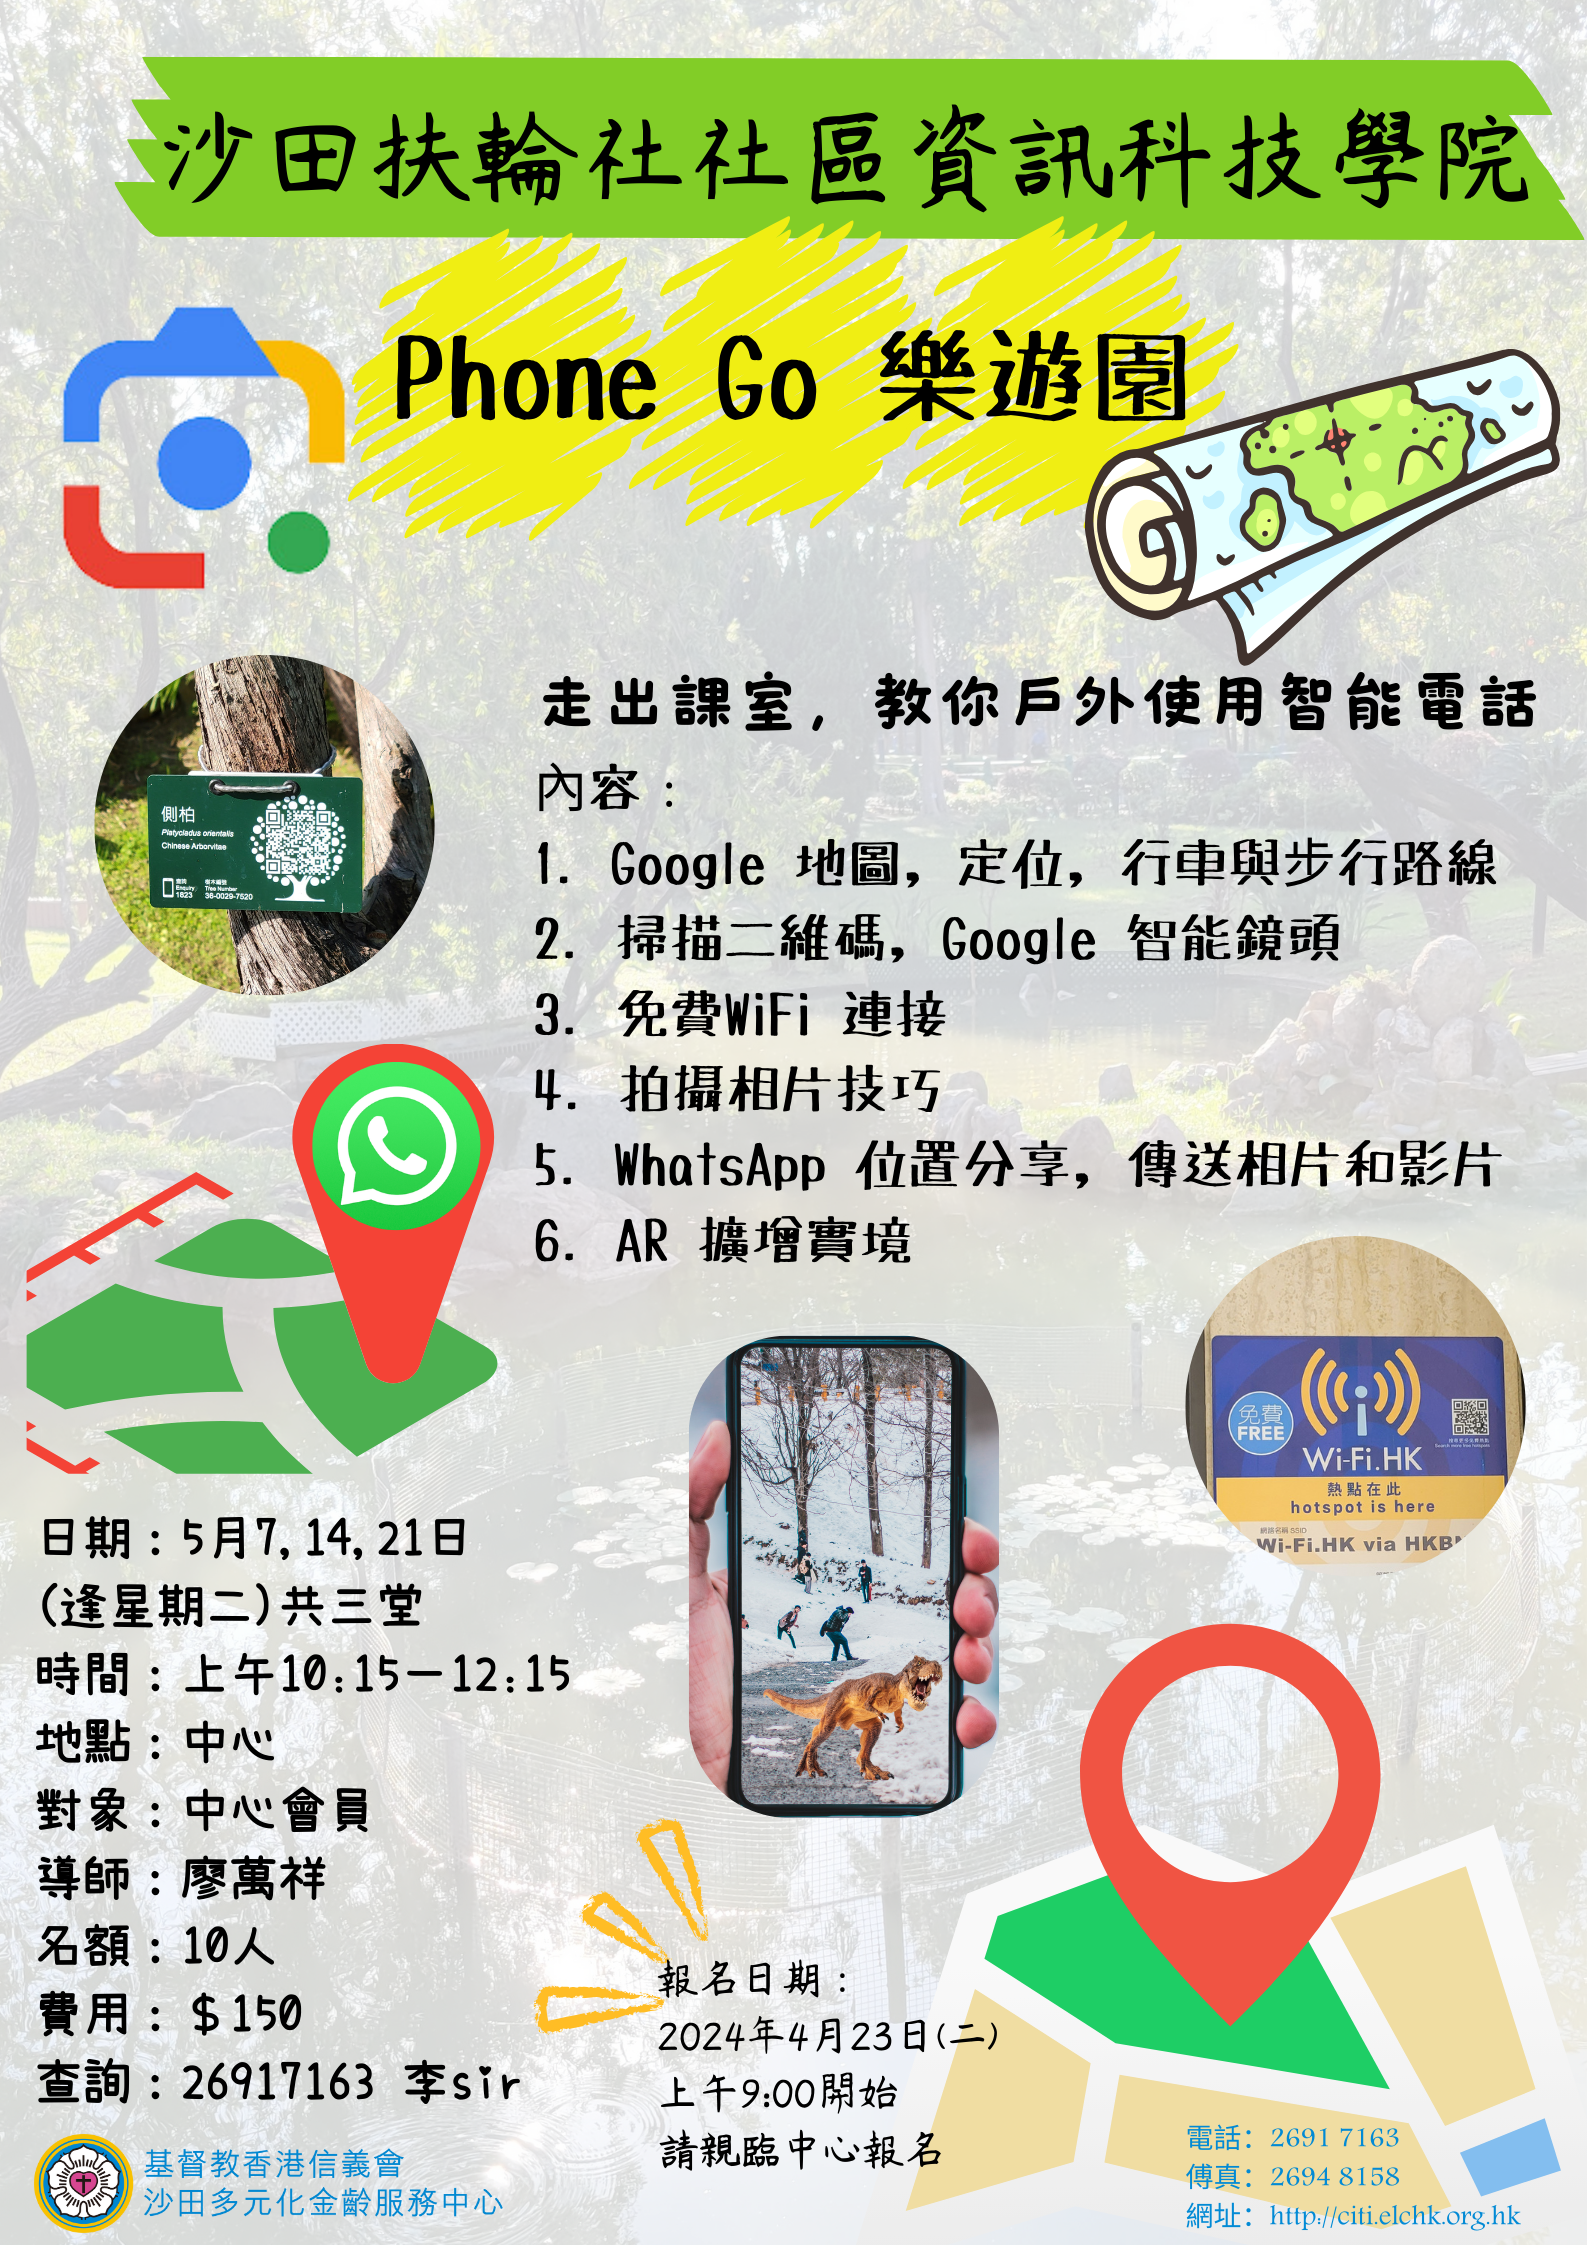 Phone Go 樂遊園